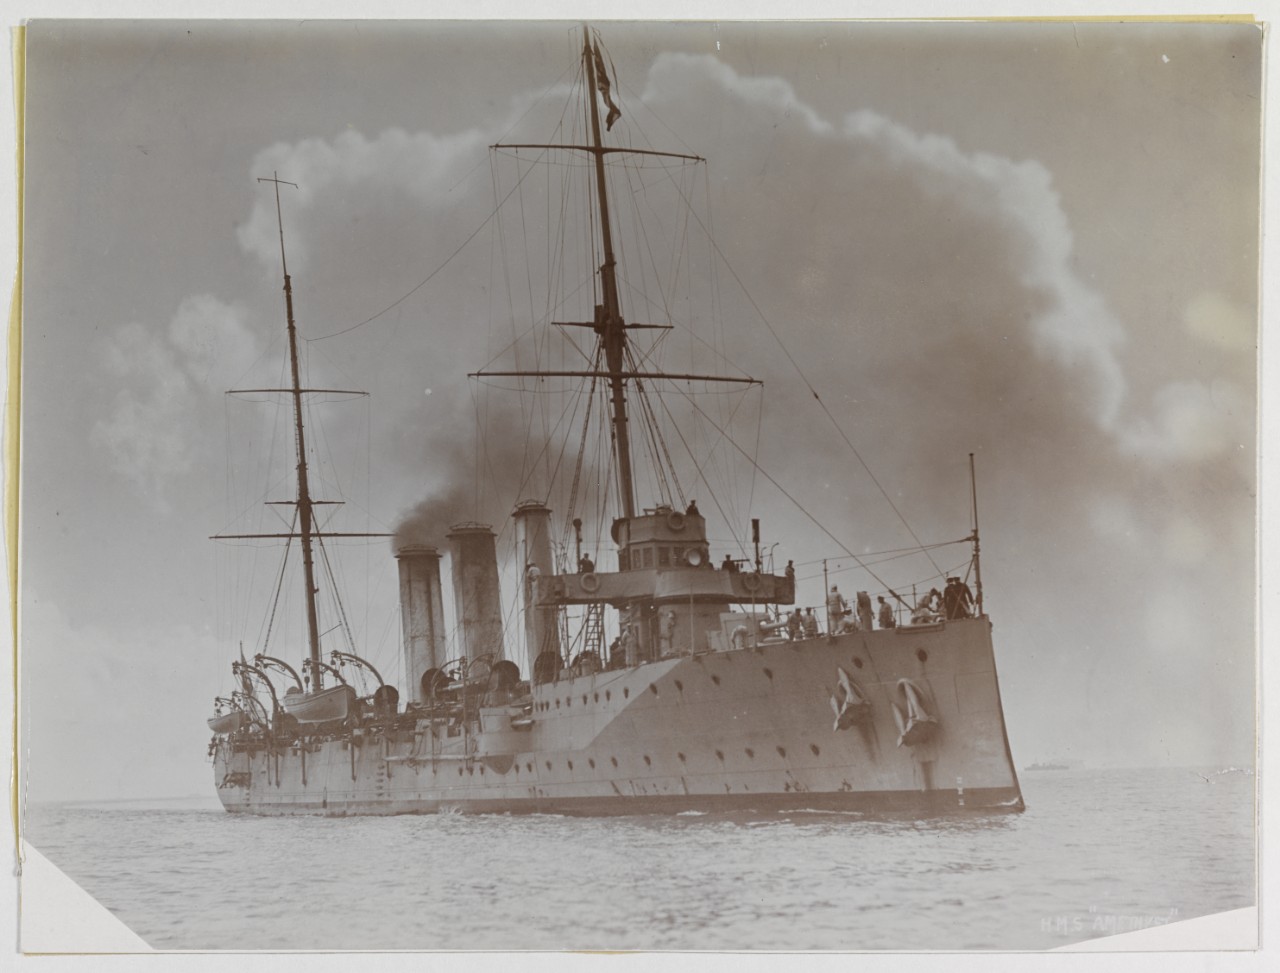 AMETHYST (British light cruiser, 1903-1920)